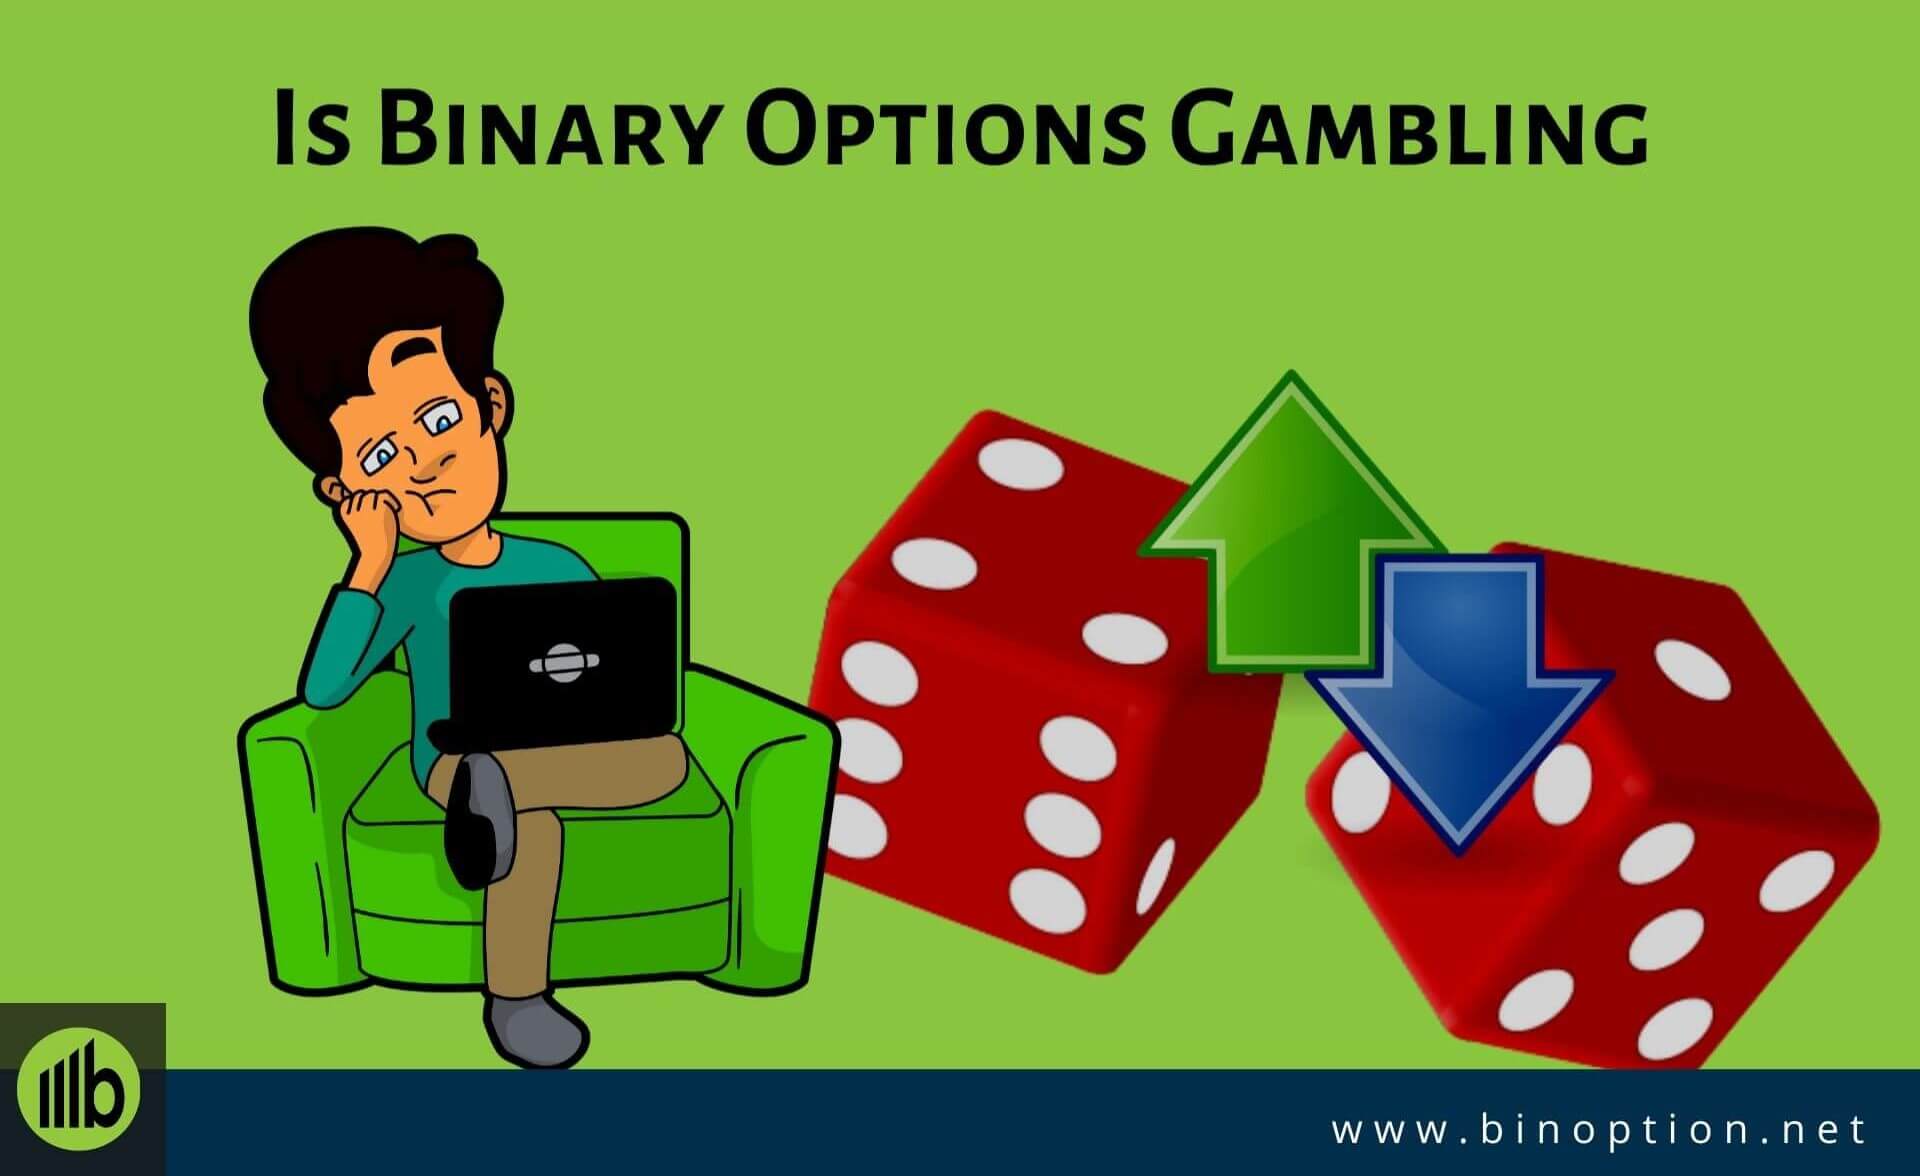 New binary options brokers 2020